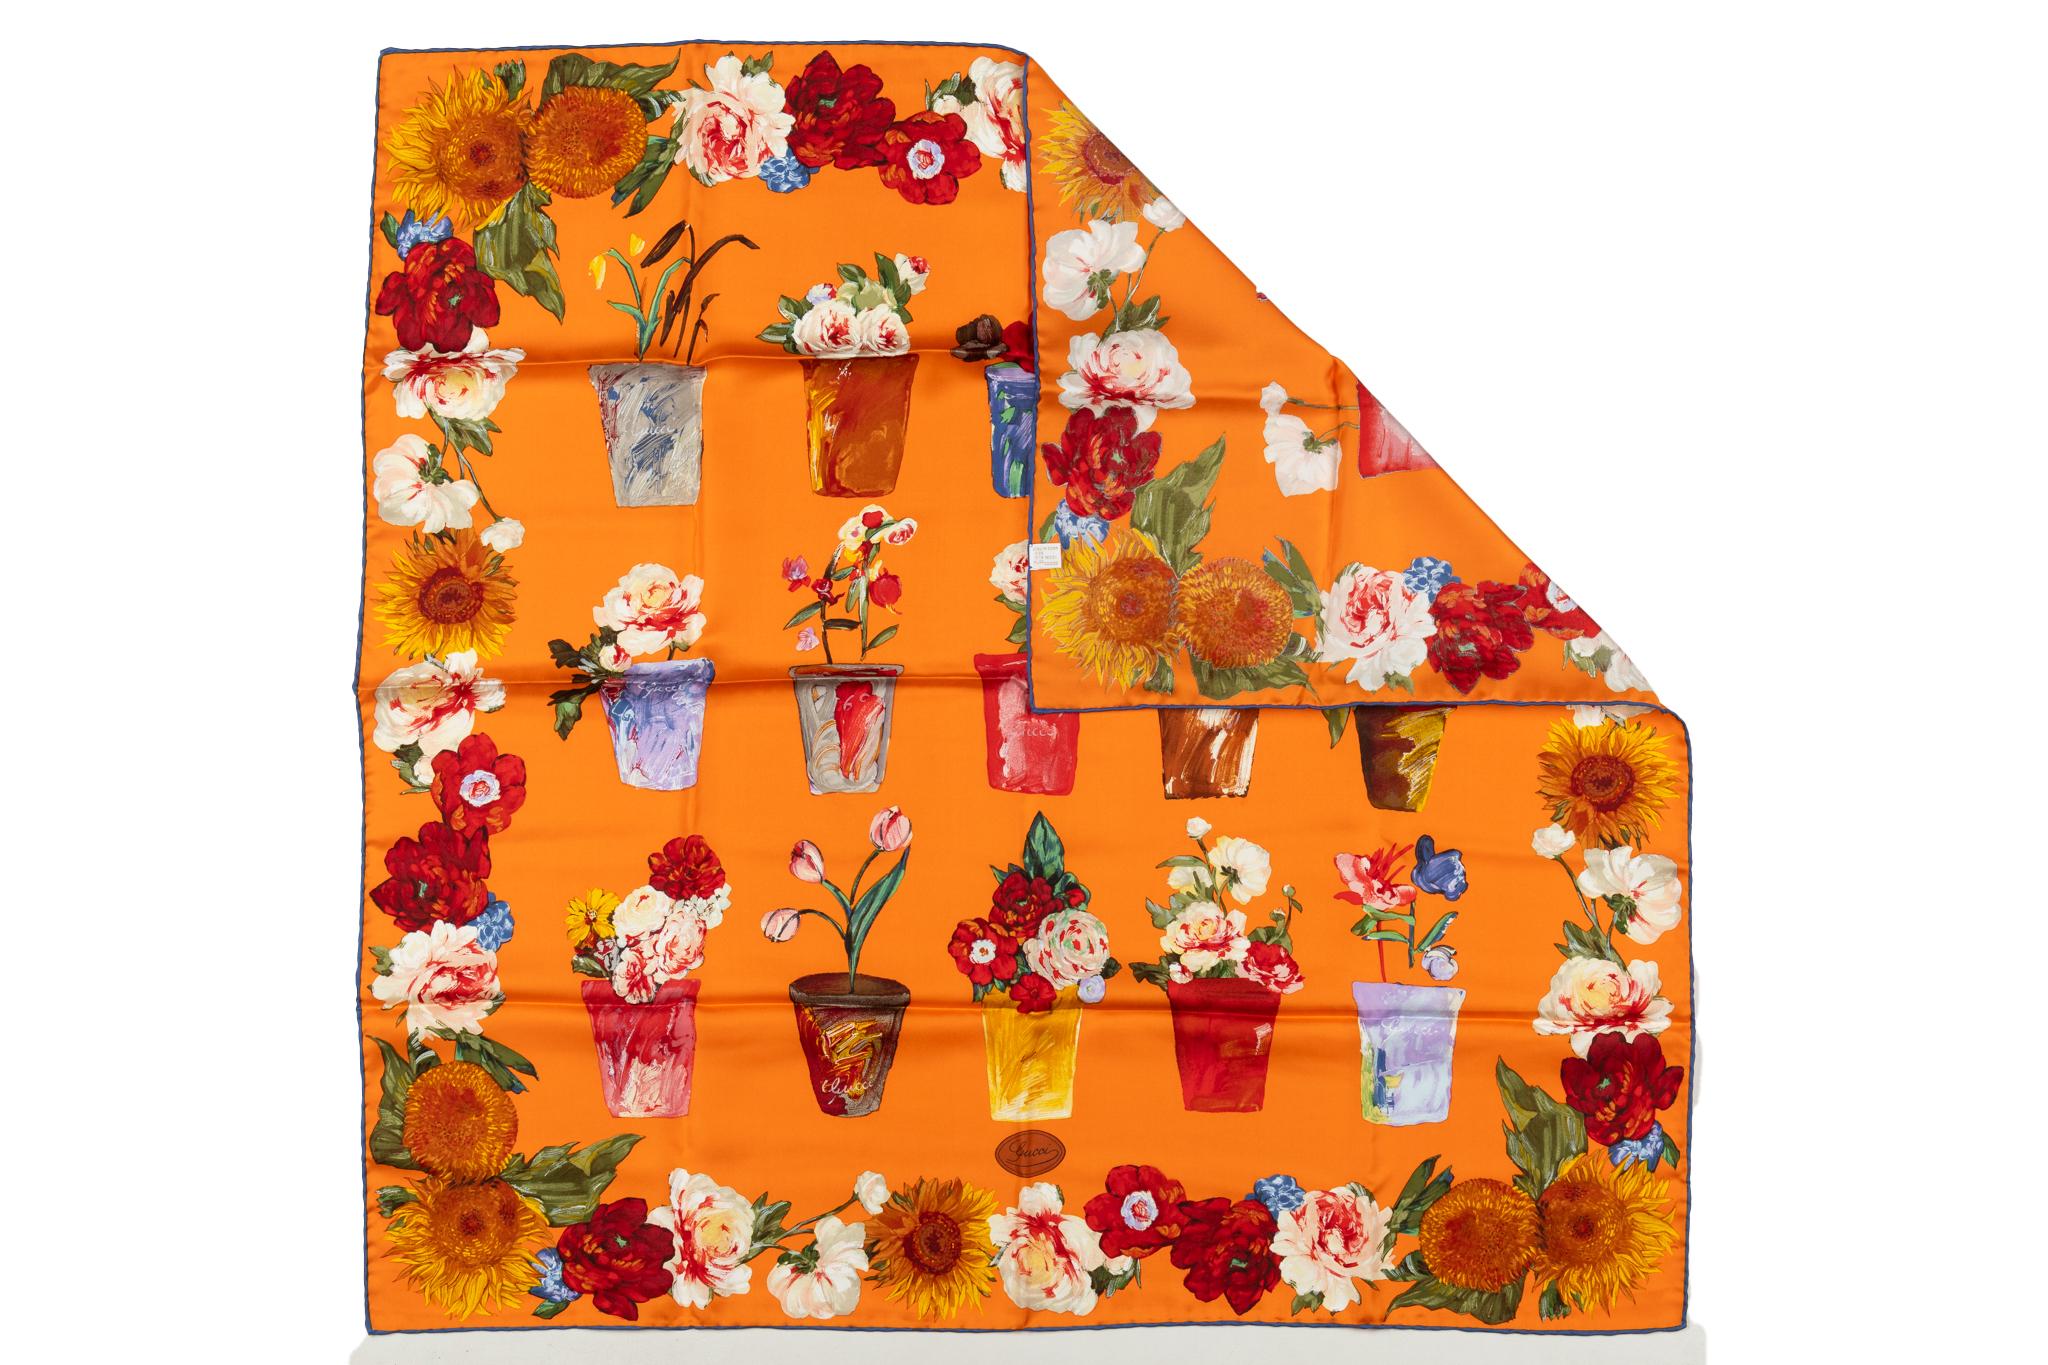 Gucci bright orange silk scarf with hand rolled edges. Flower vases cheerful design.